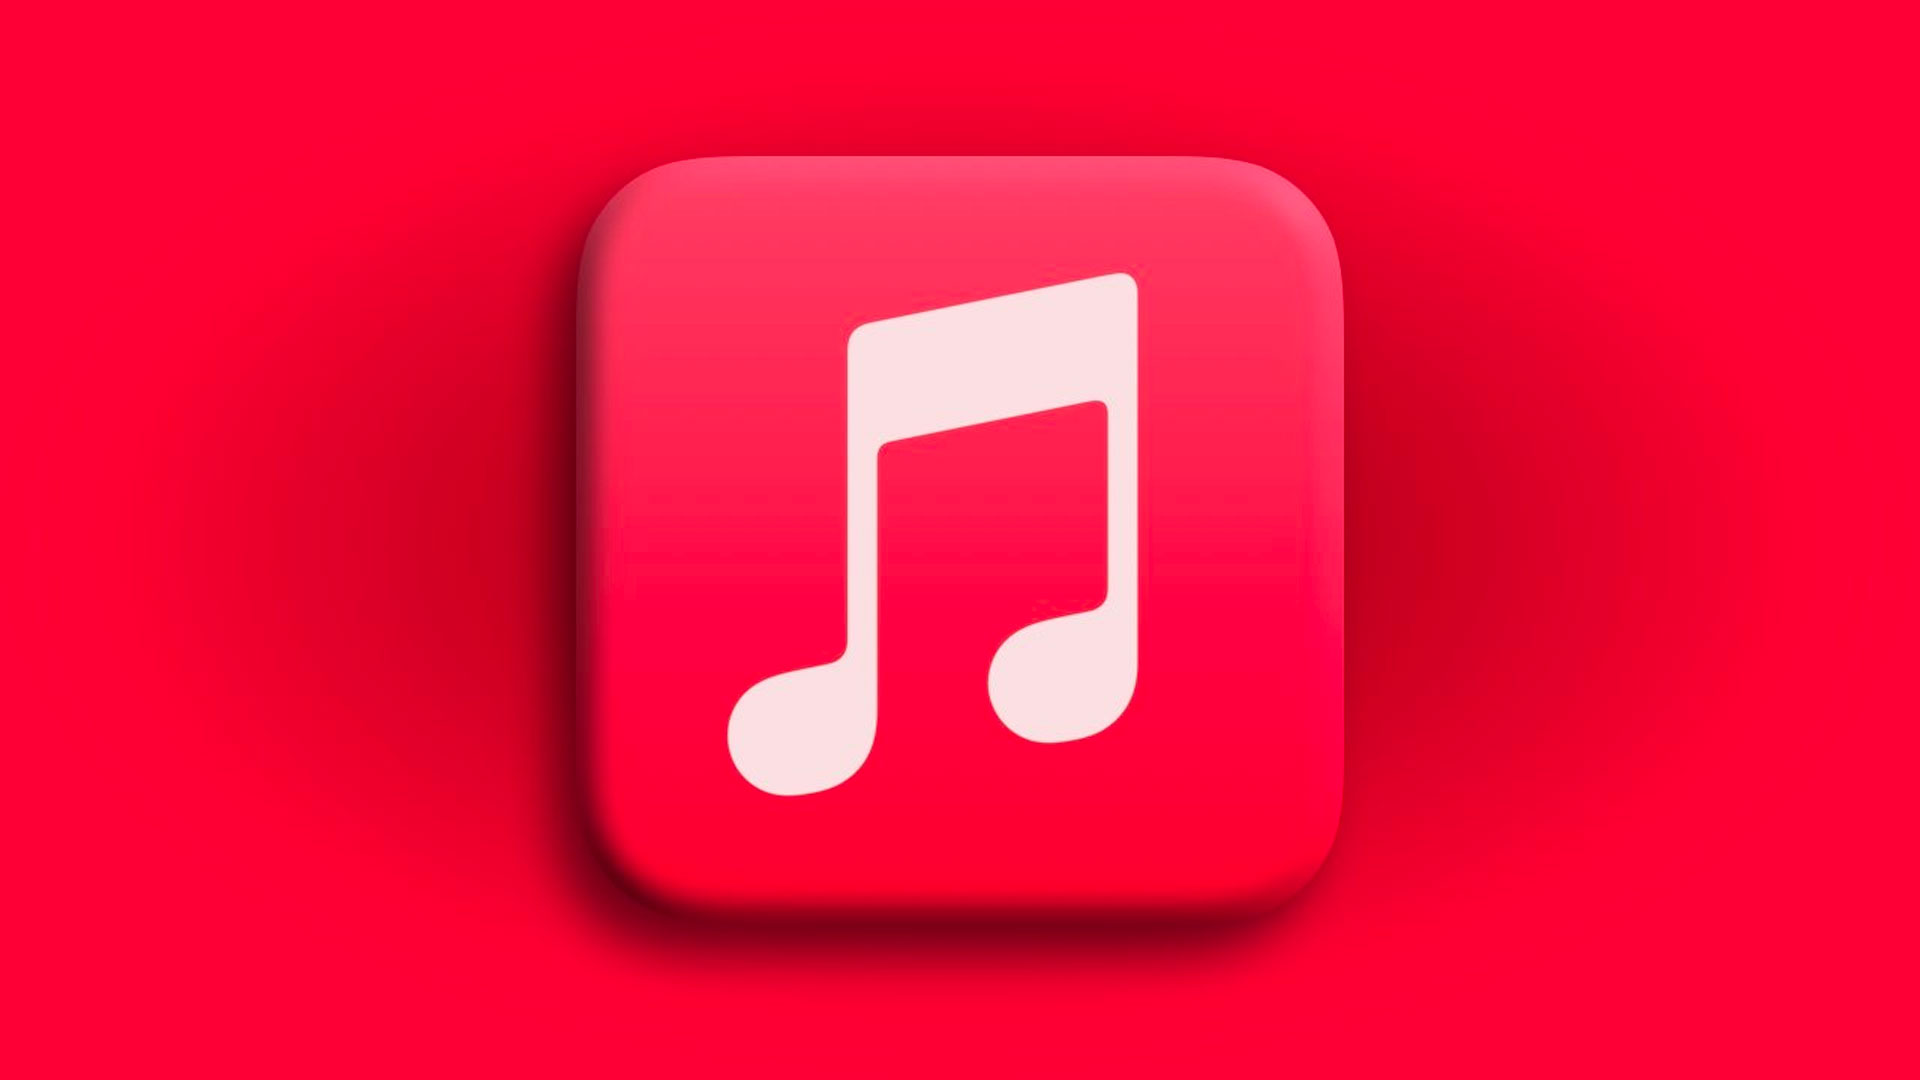 Apple Music cena